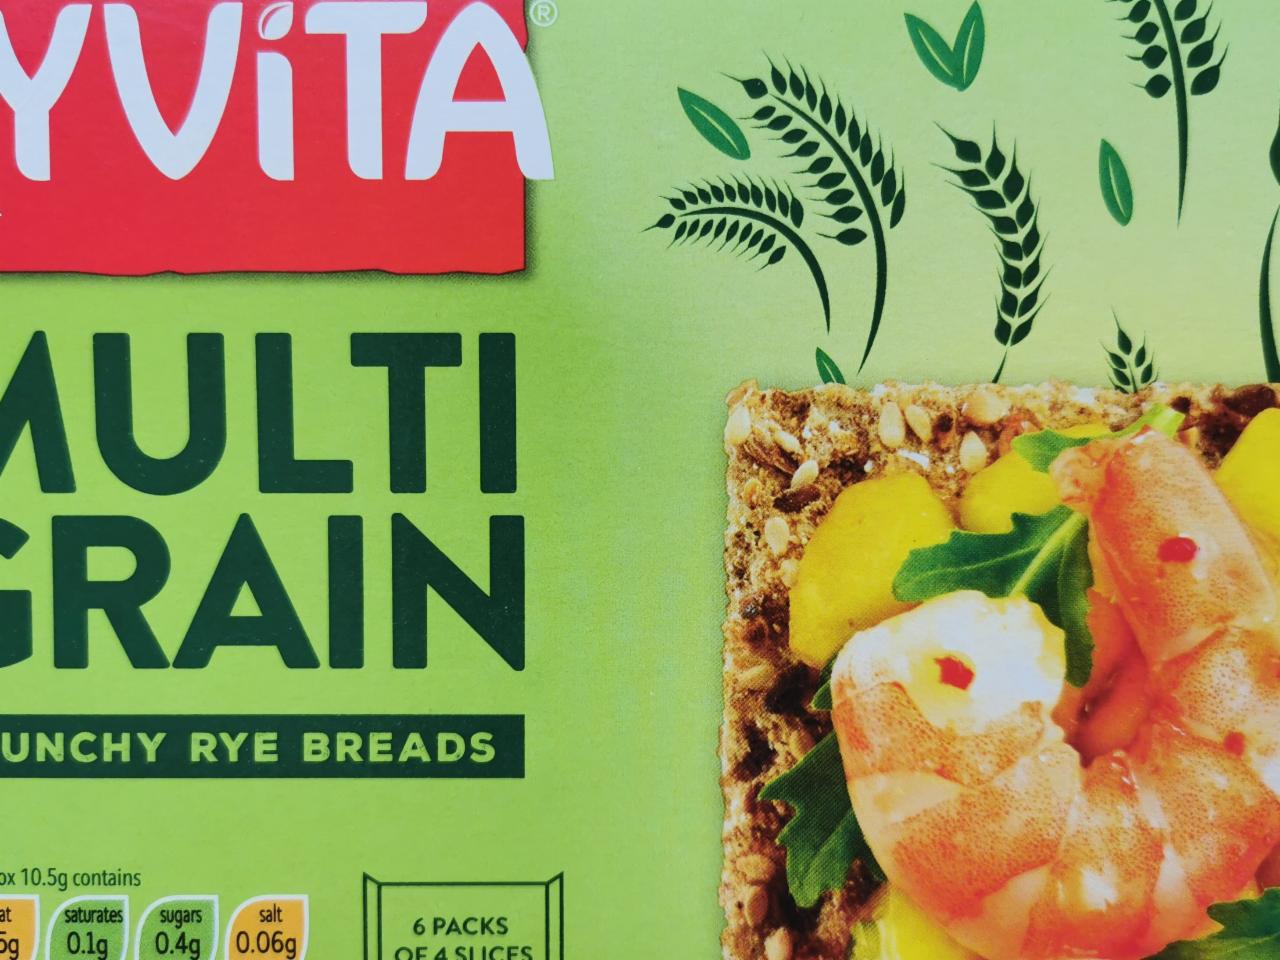 Photo - Multi Grain Crunchy Rye Breads Ryvita